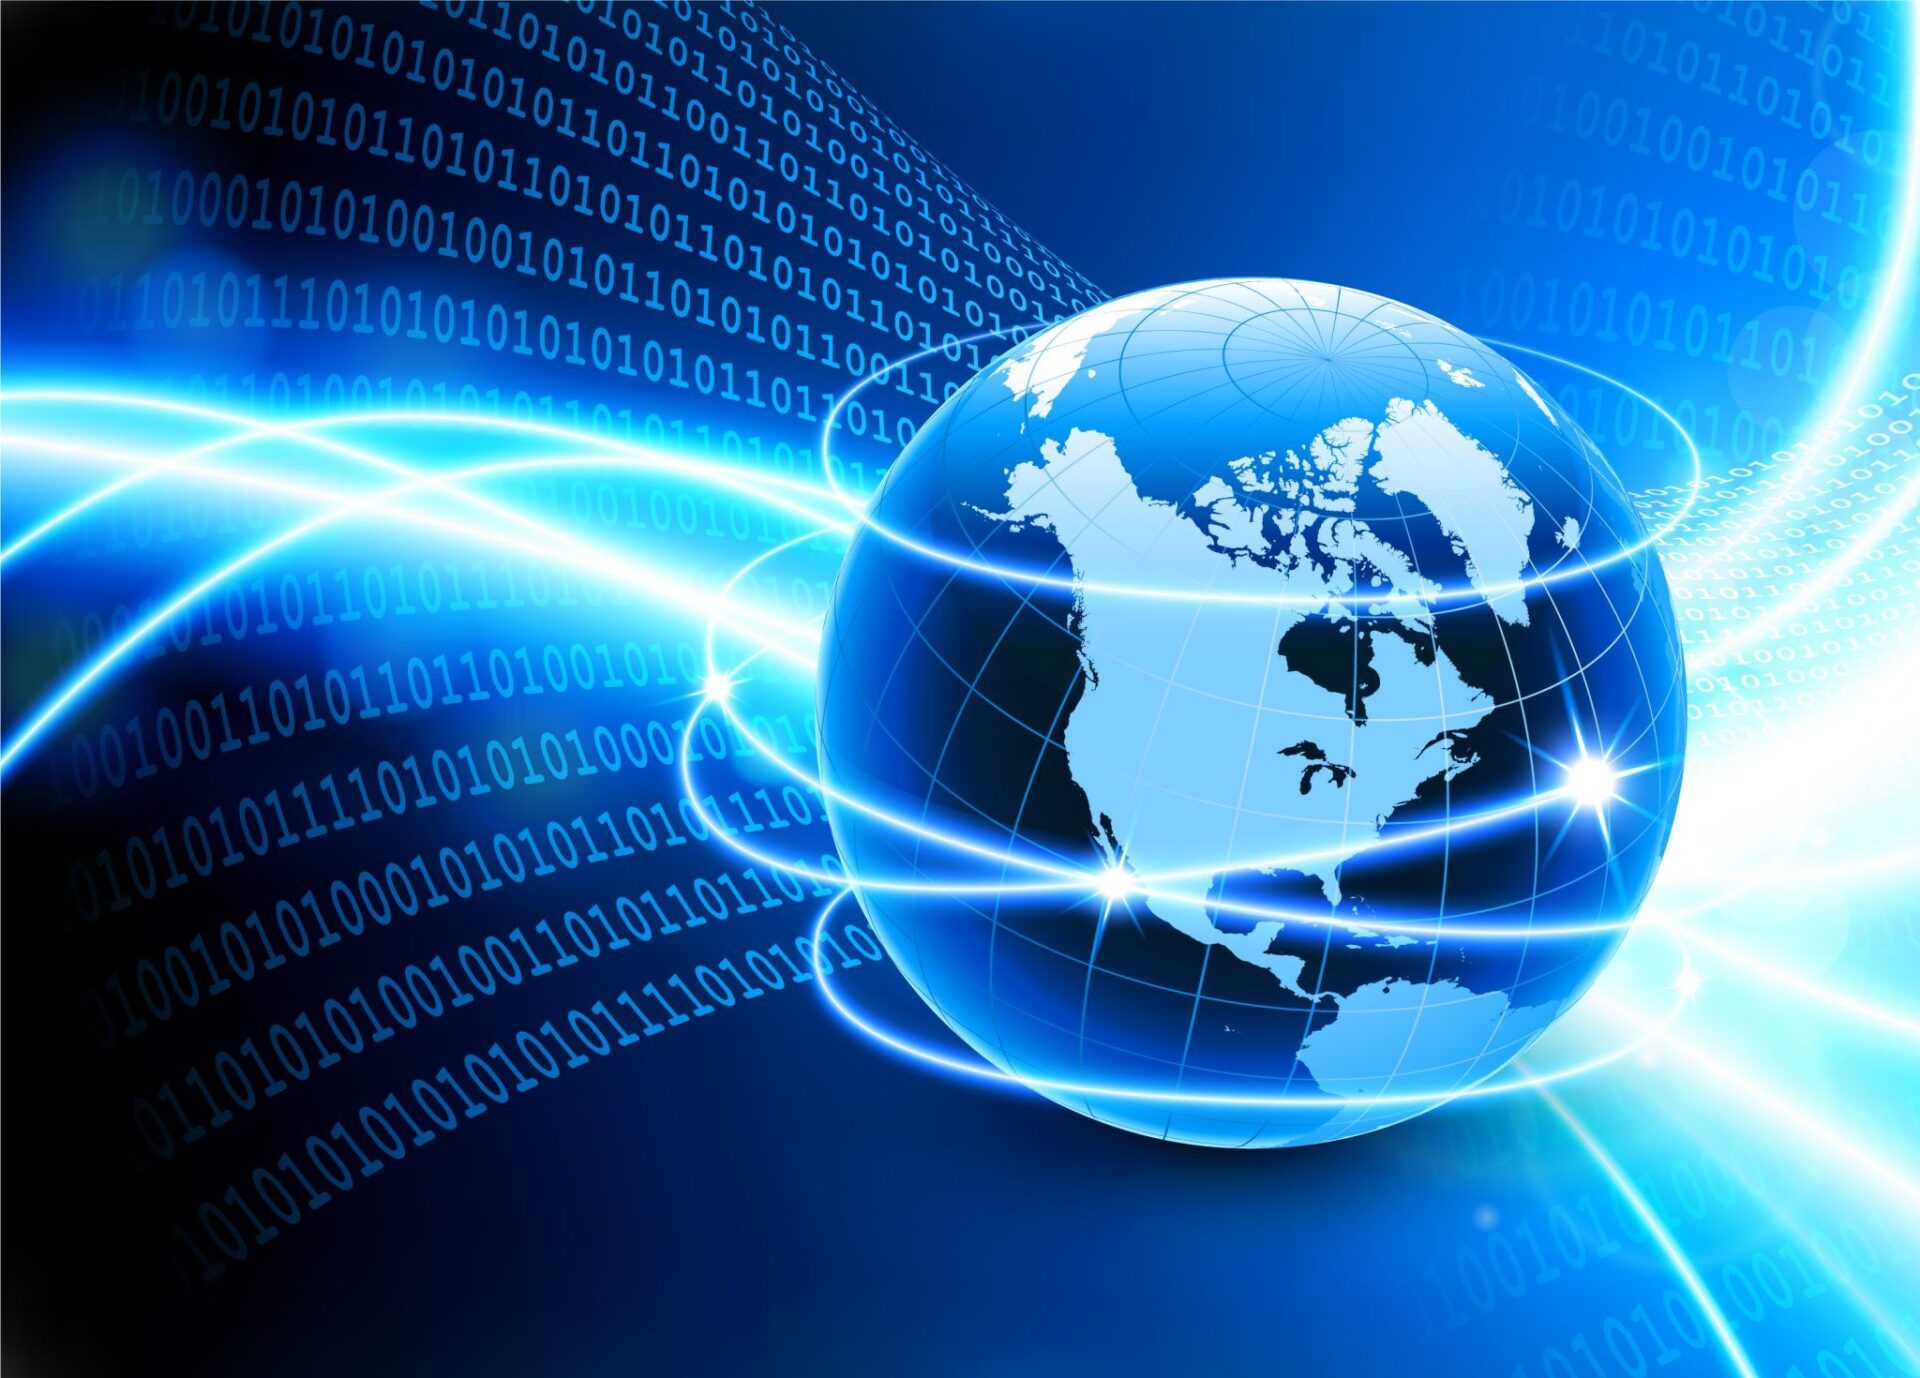 Broadband is ‘strategic to achieving sustainable development’